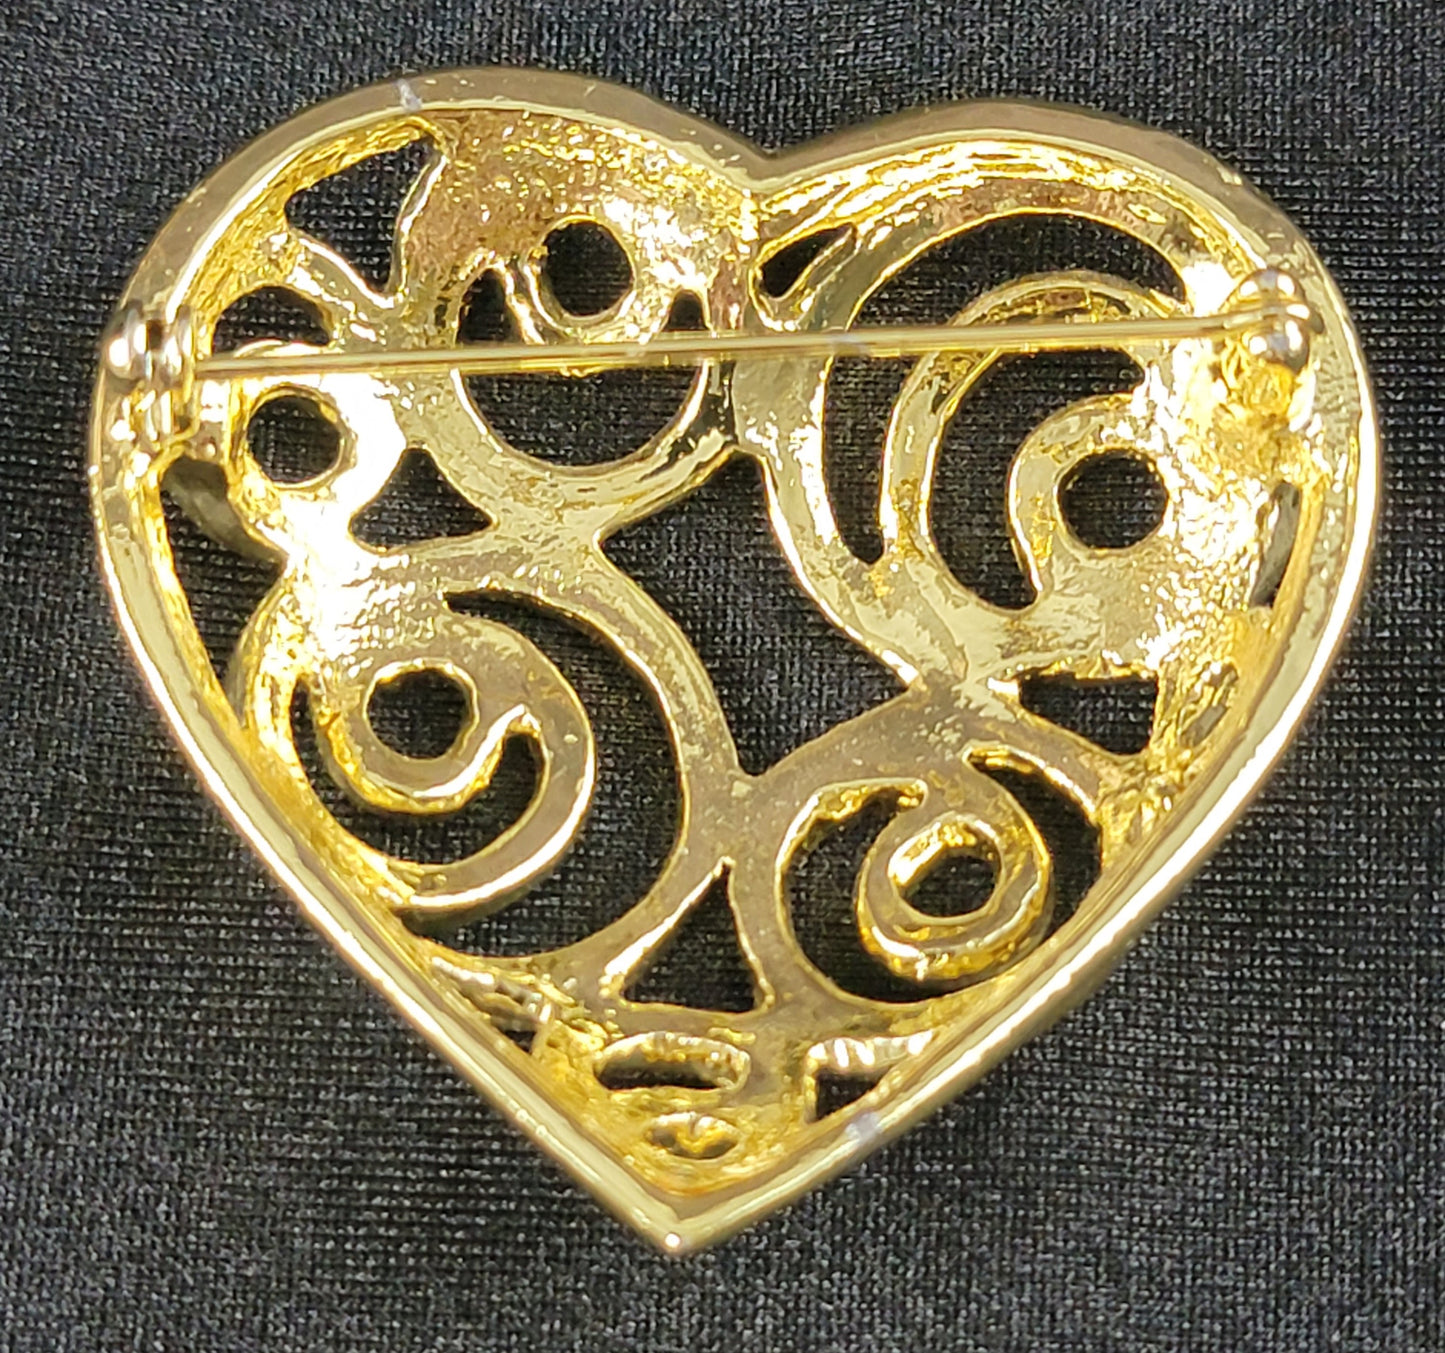 Decorative Shiny Gold Tone Openwork Scrollwork Heart Brooch Pin 1 7/8"